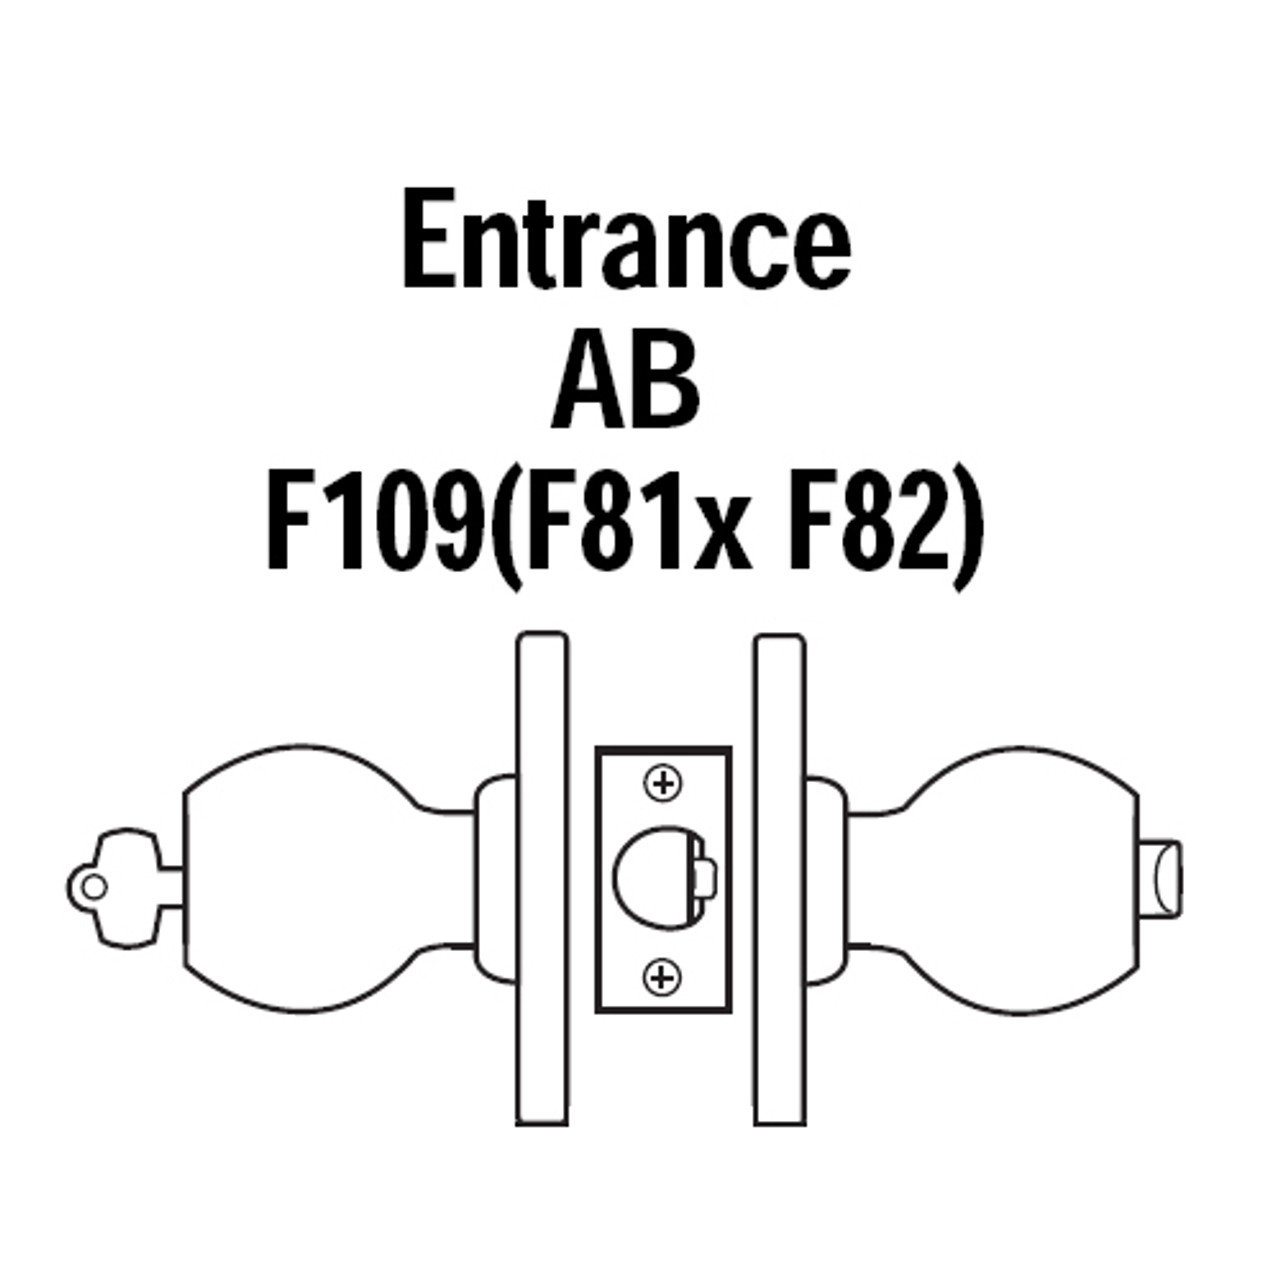 8K47AB4ASTK625 Best 8K Series Entrance Heavy Duty Cylindrical Knob Locks with Round Style in Bright Chrome